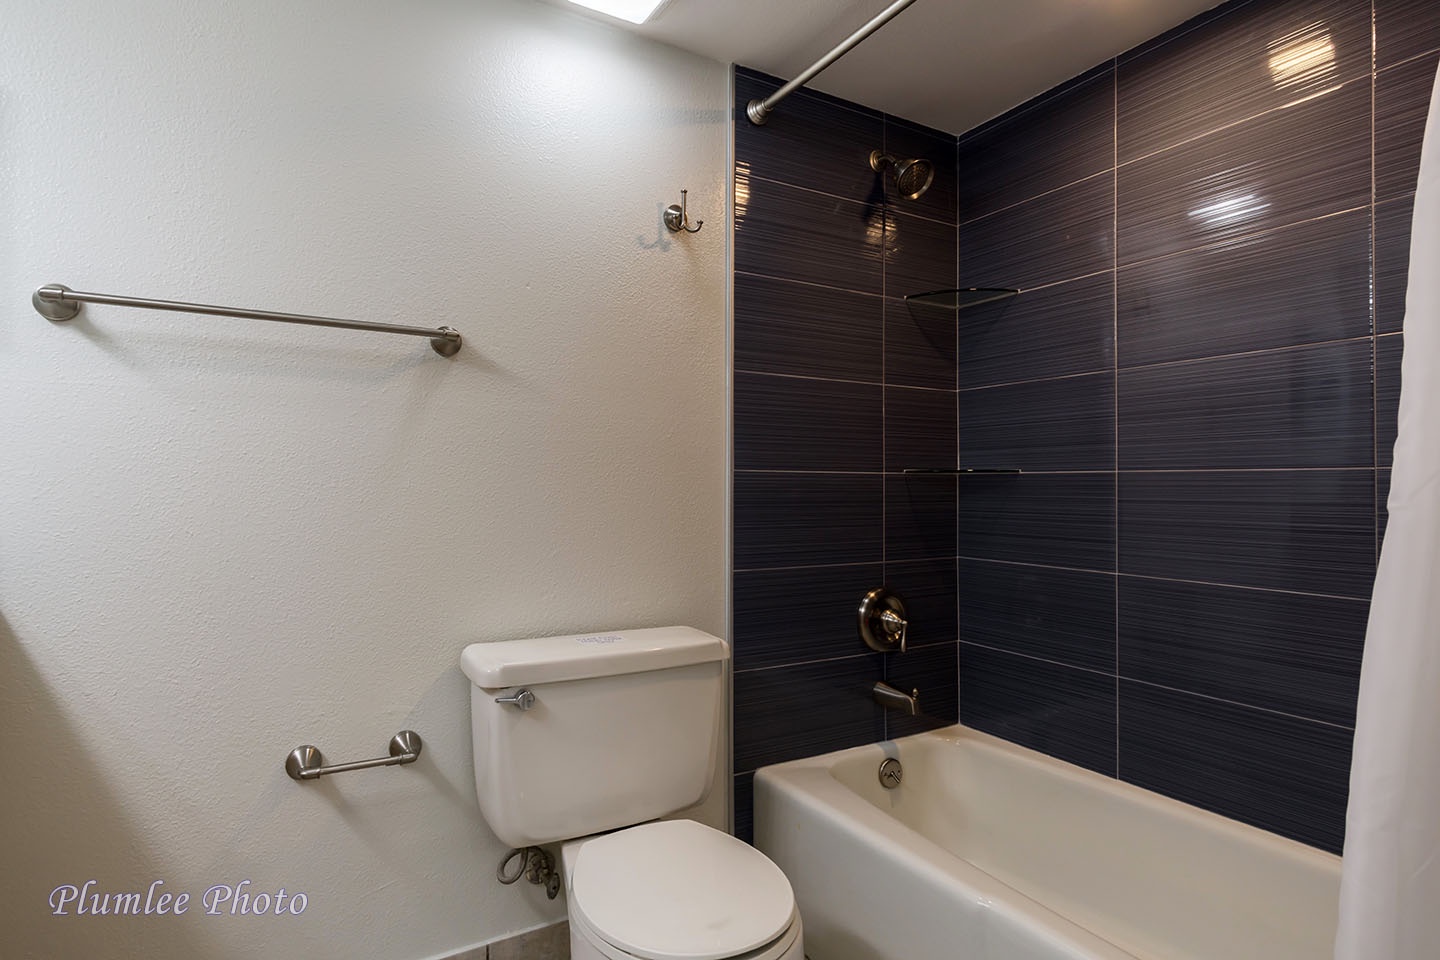 The Hallway Bathroom has a tub and shower combo.